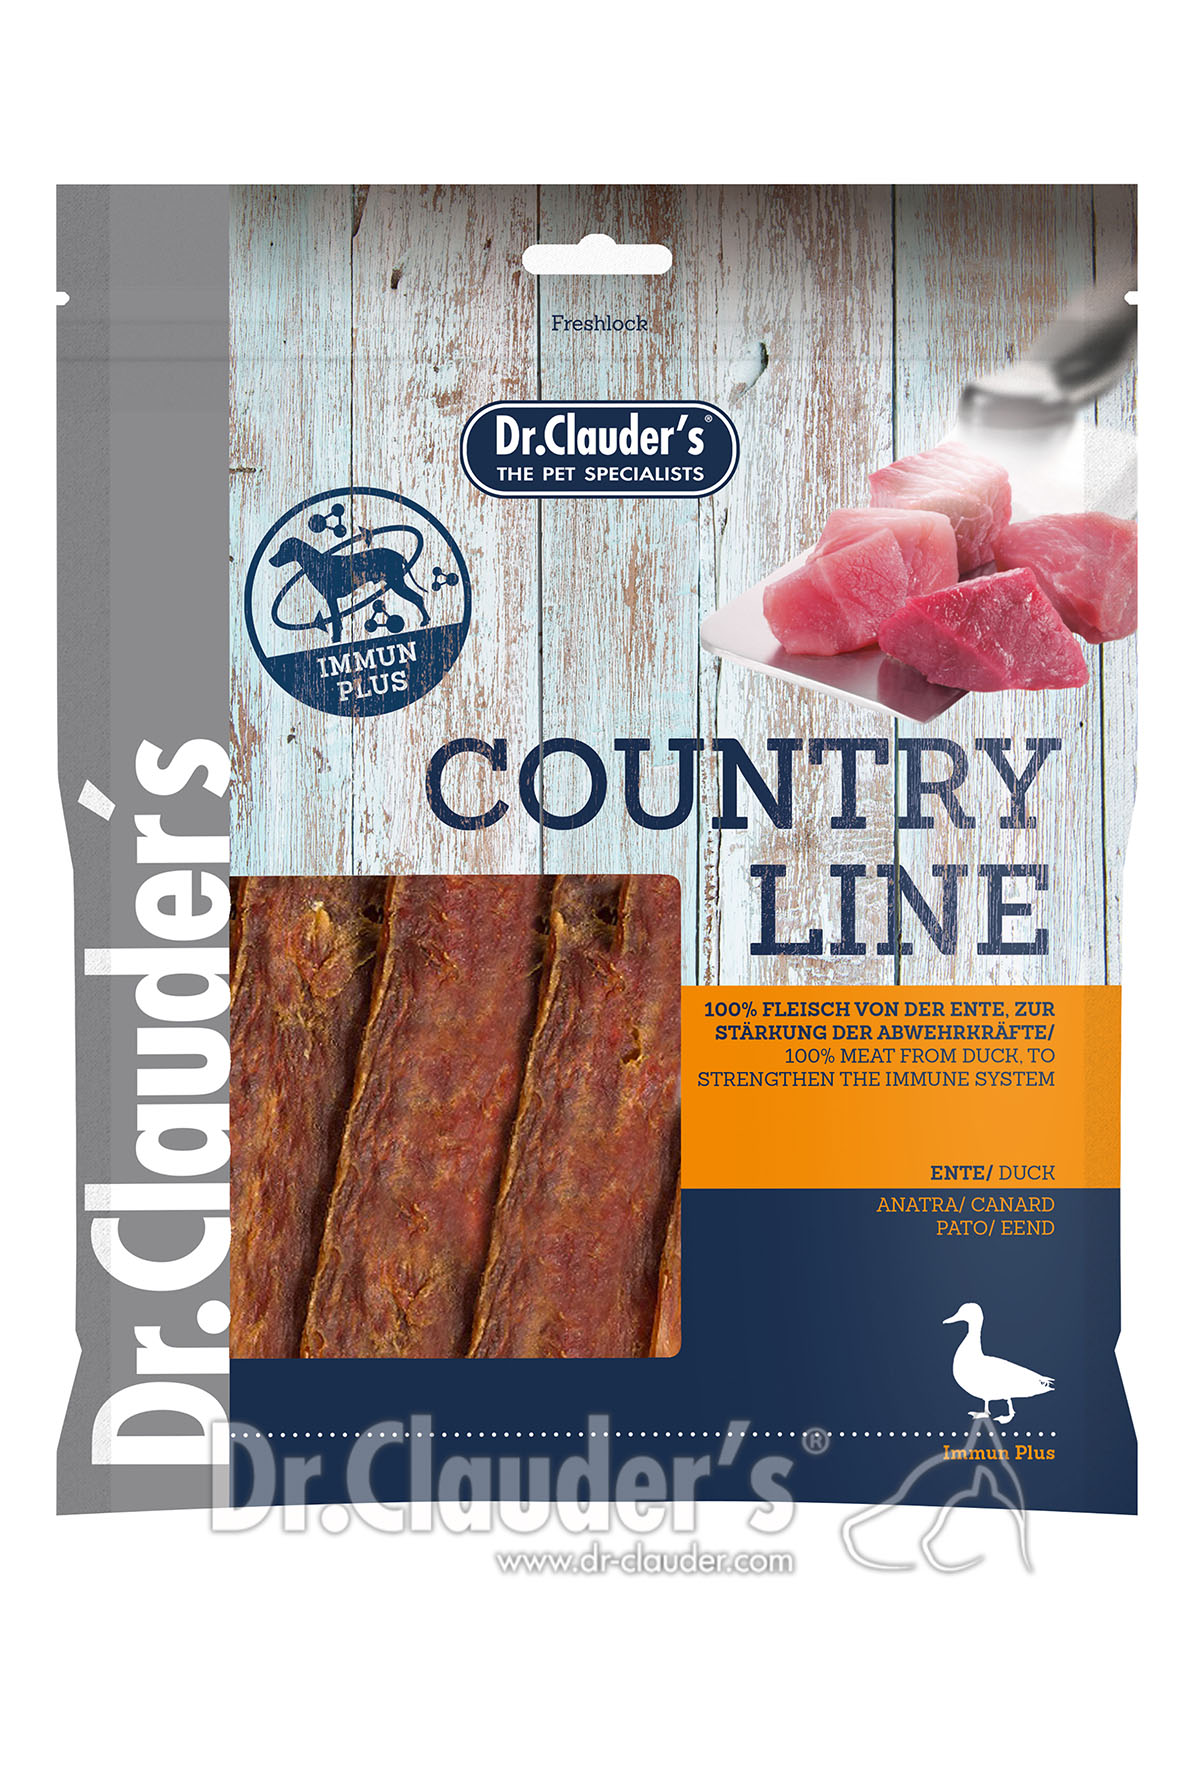 Dr. Clauders Premium Country Line Ente